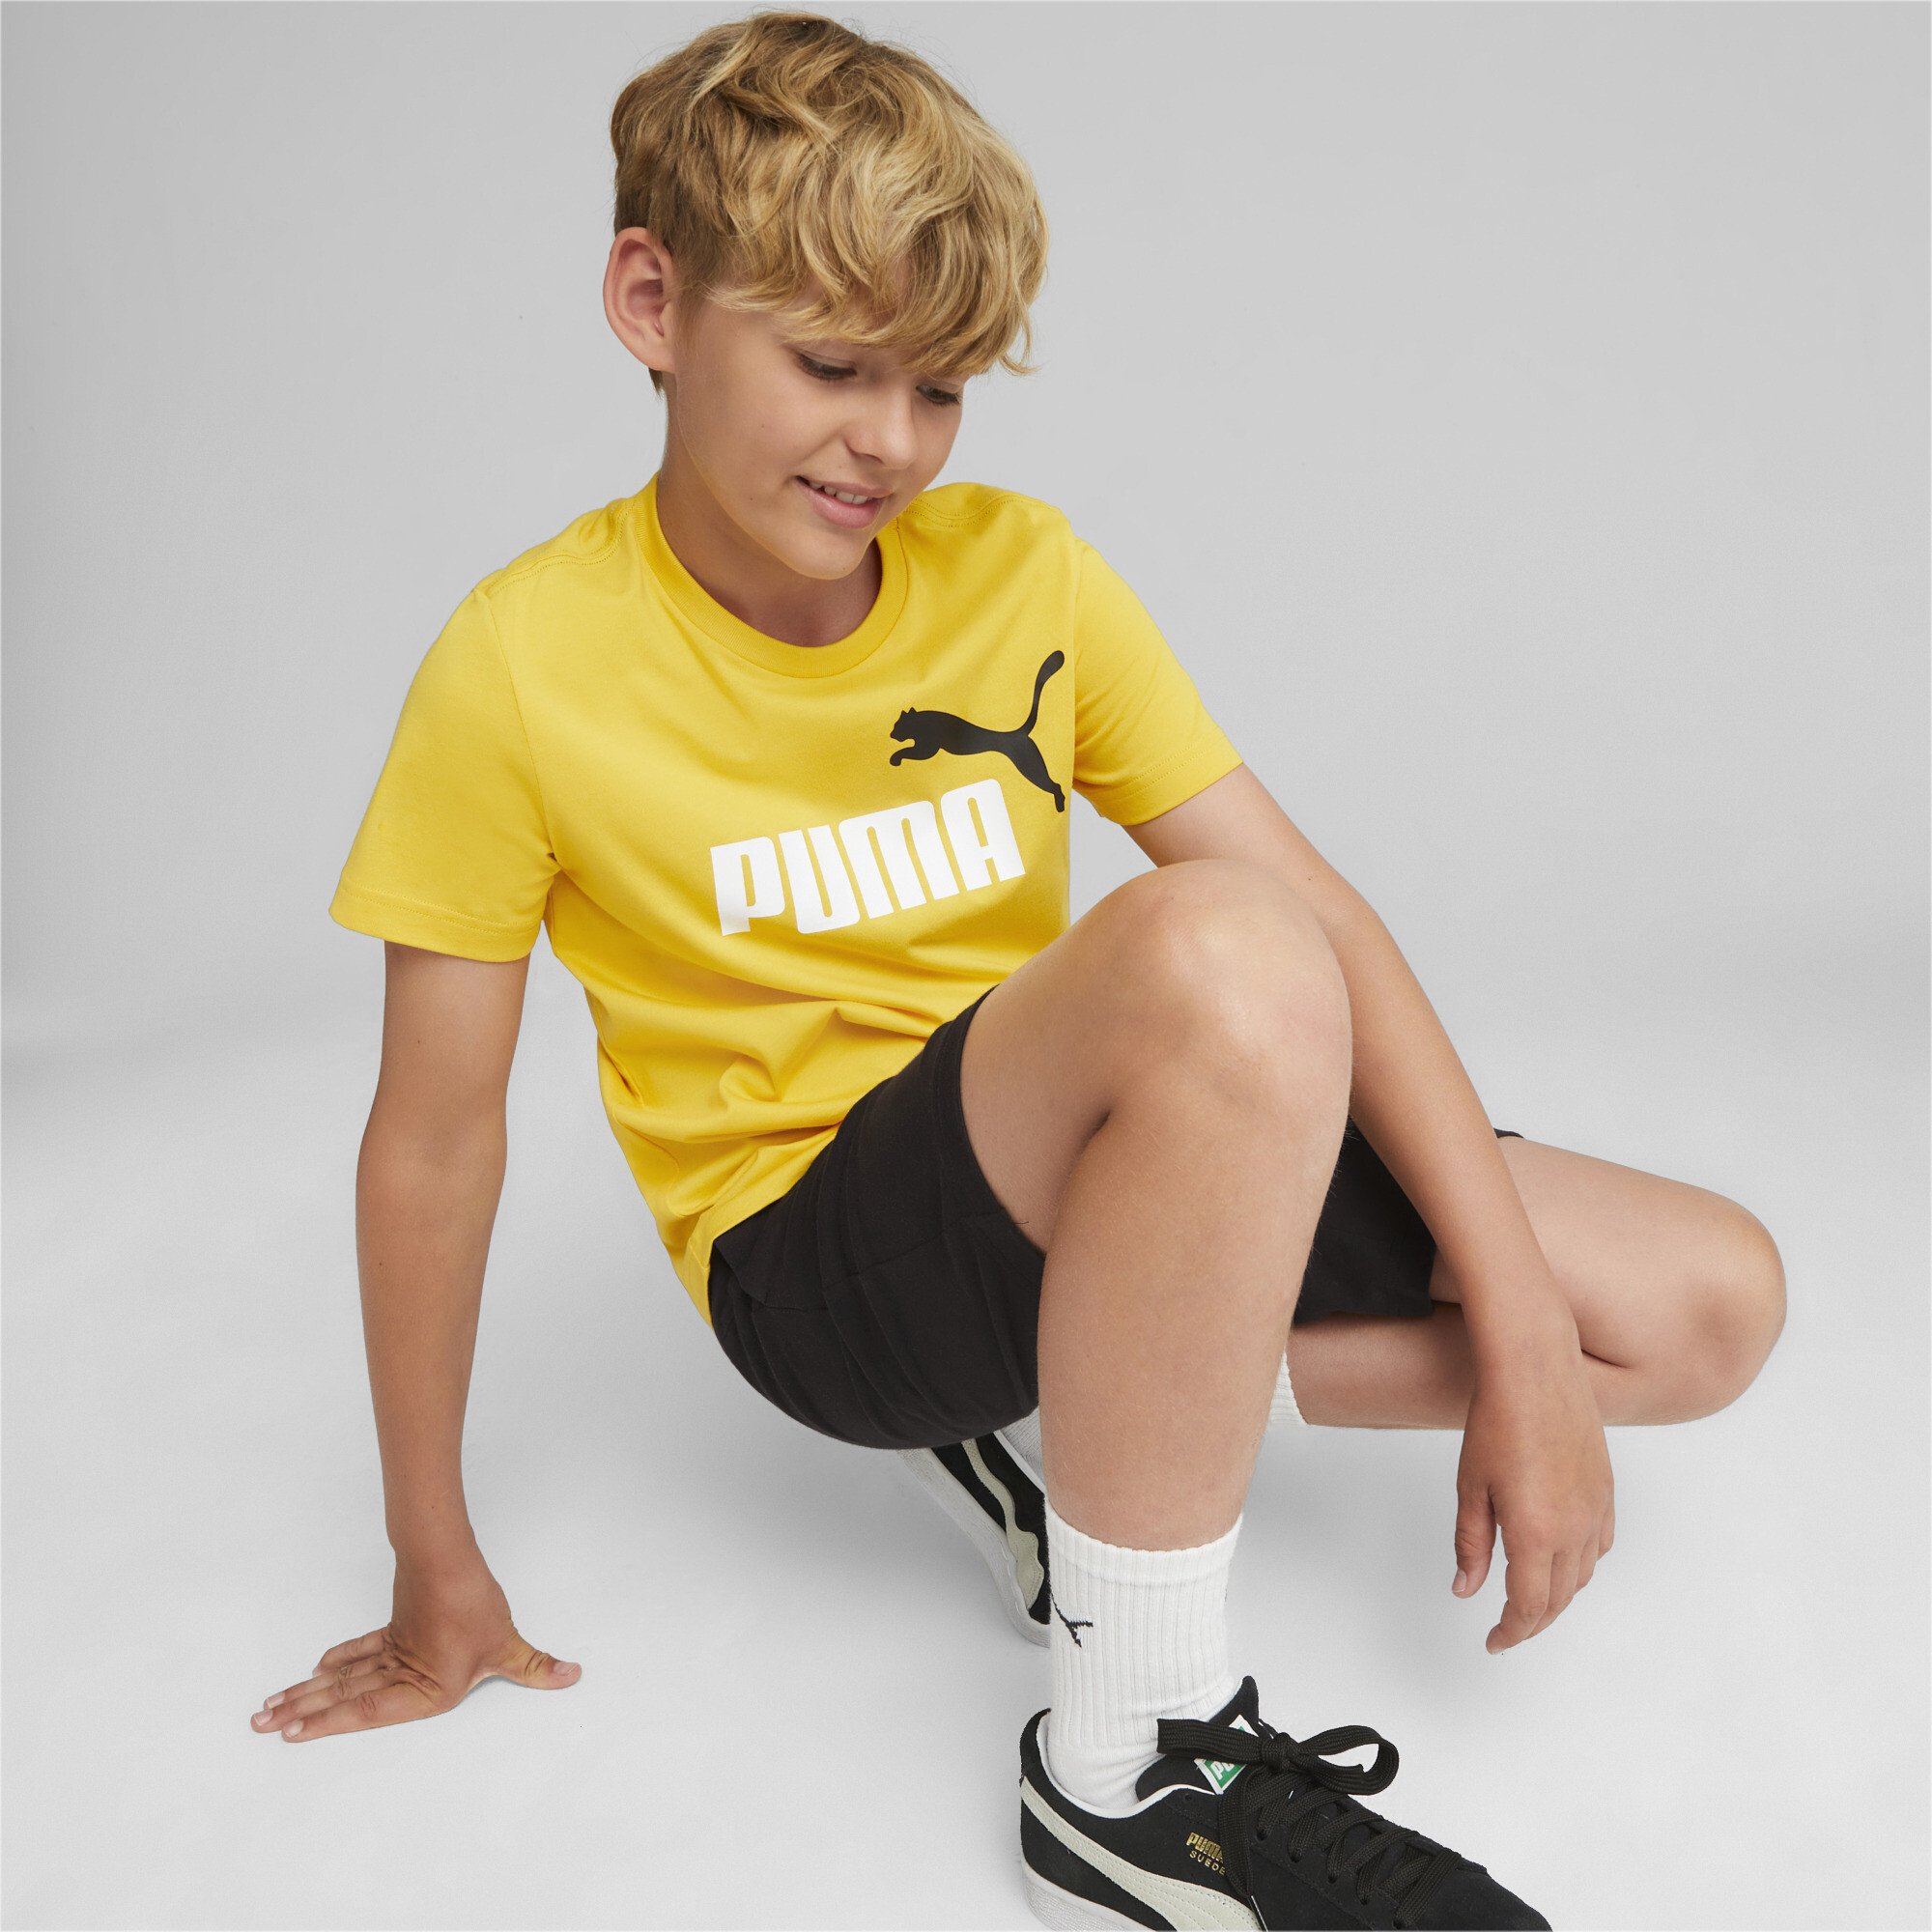 Men's Puma Jersey Youth Shorts Set, Yellow, Size 15-16Y, Clothing